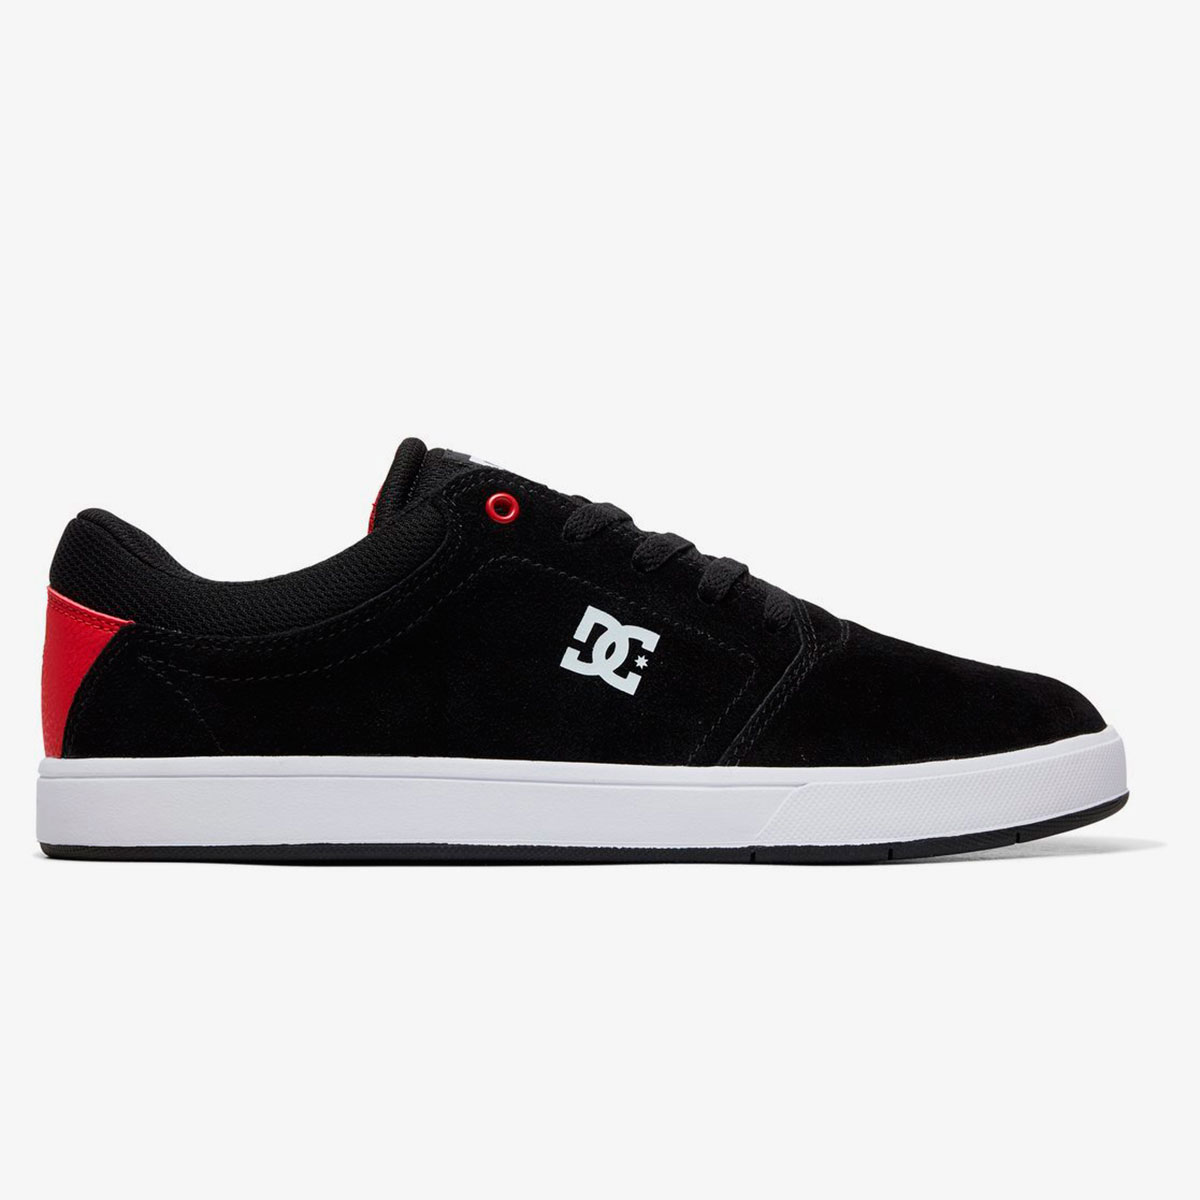 Купить кеды DC Shoes Crisis Black/Red/White (ADYS100029-XKRW) в  интернет-магазине Proskater.ru